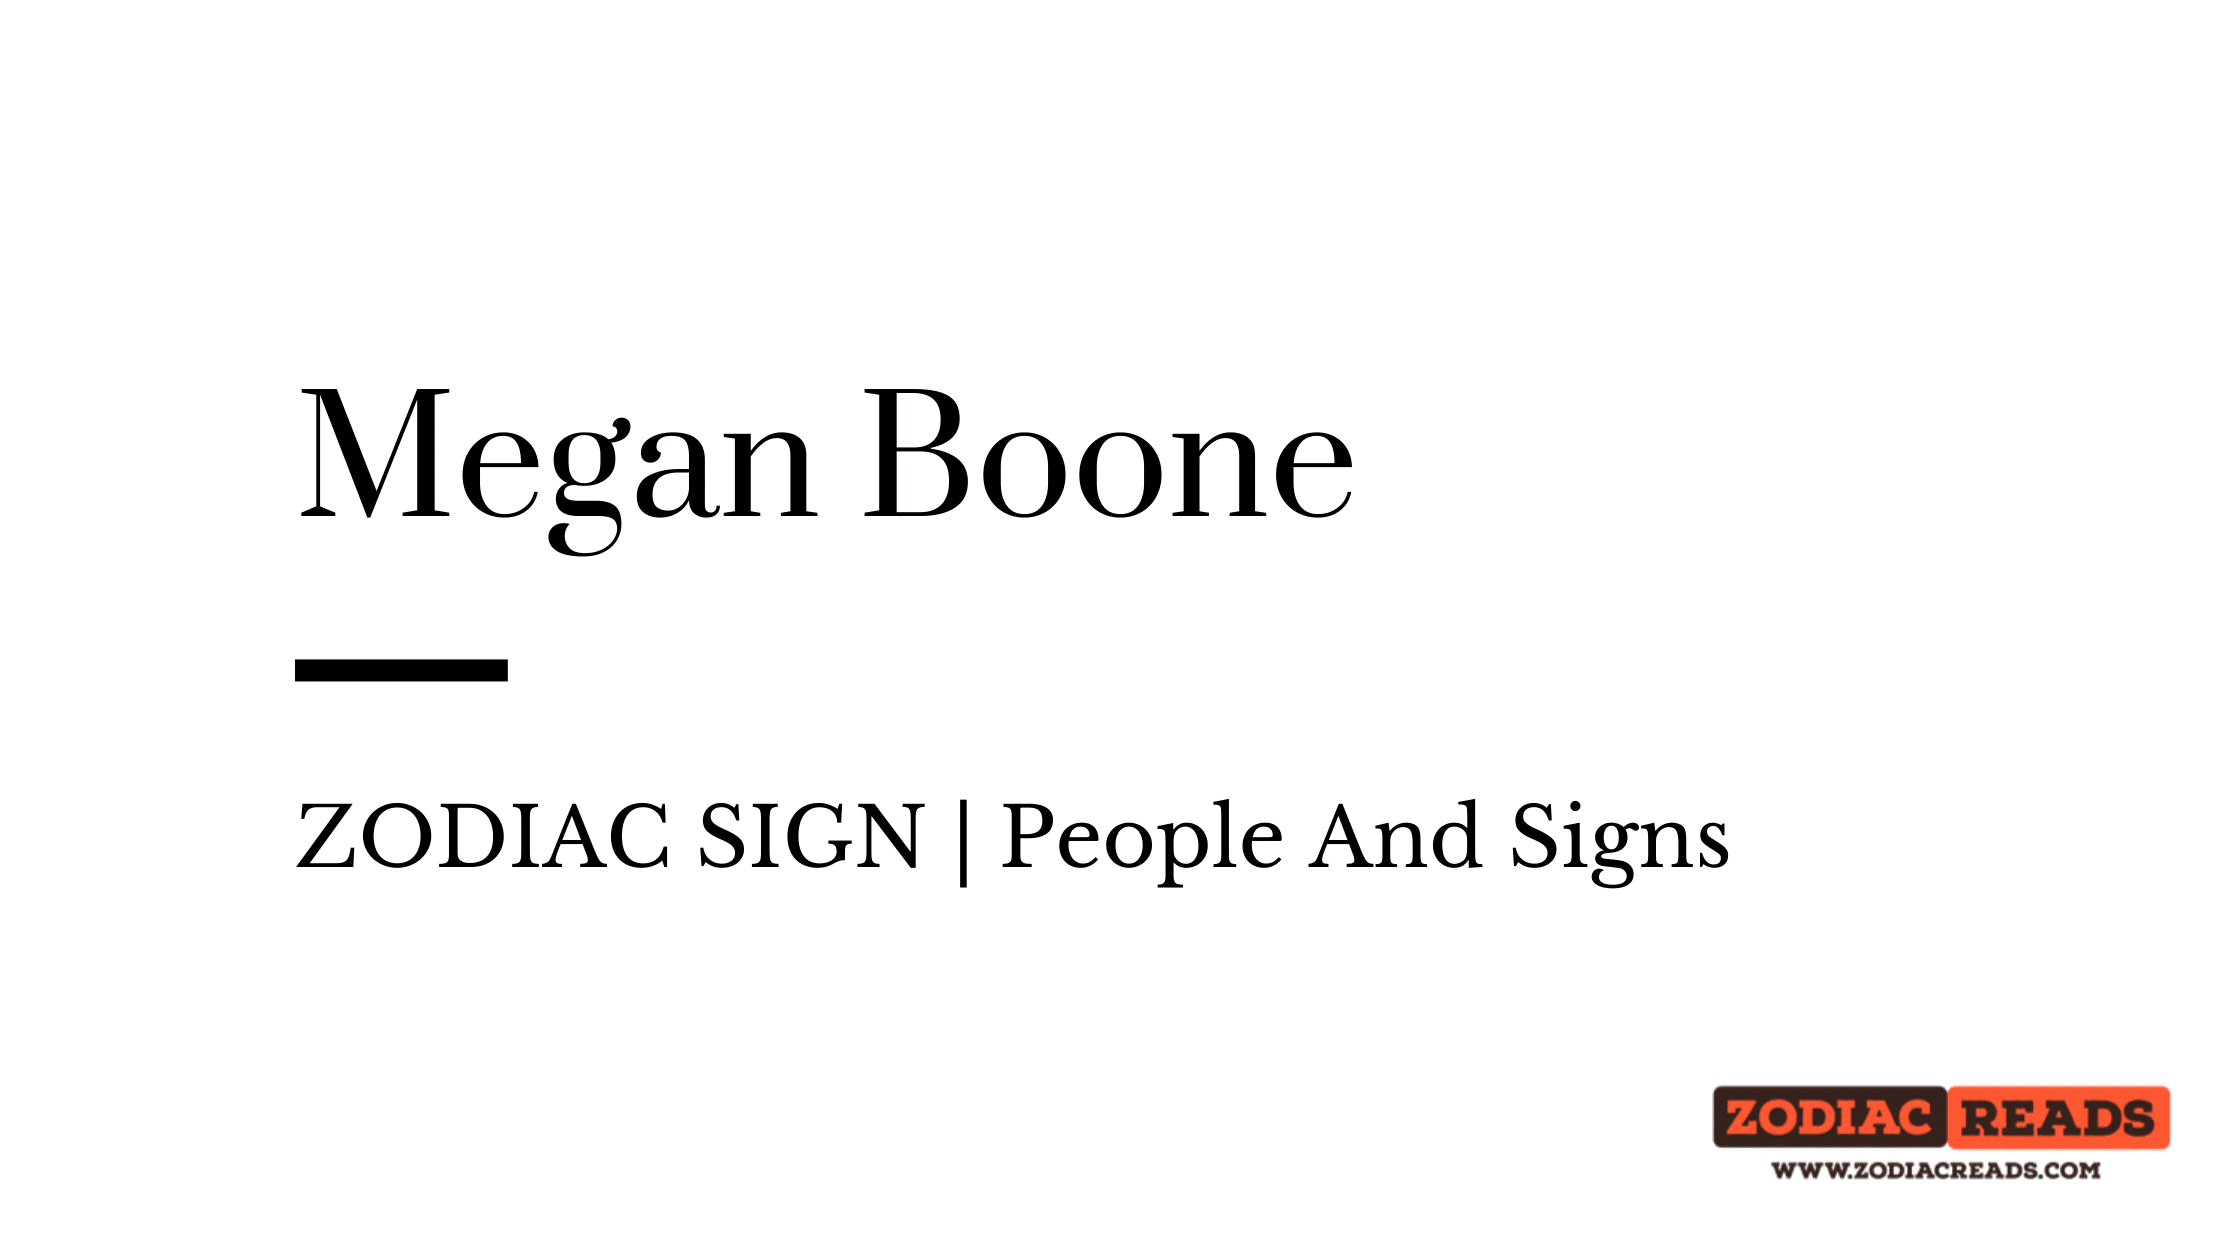 Megan Boone zodiac